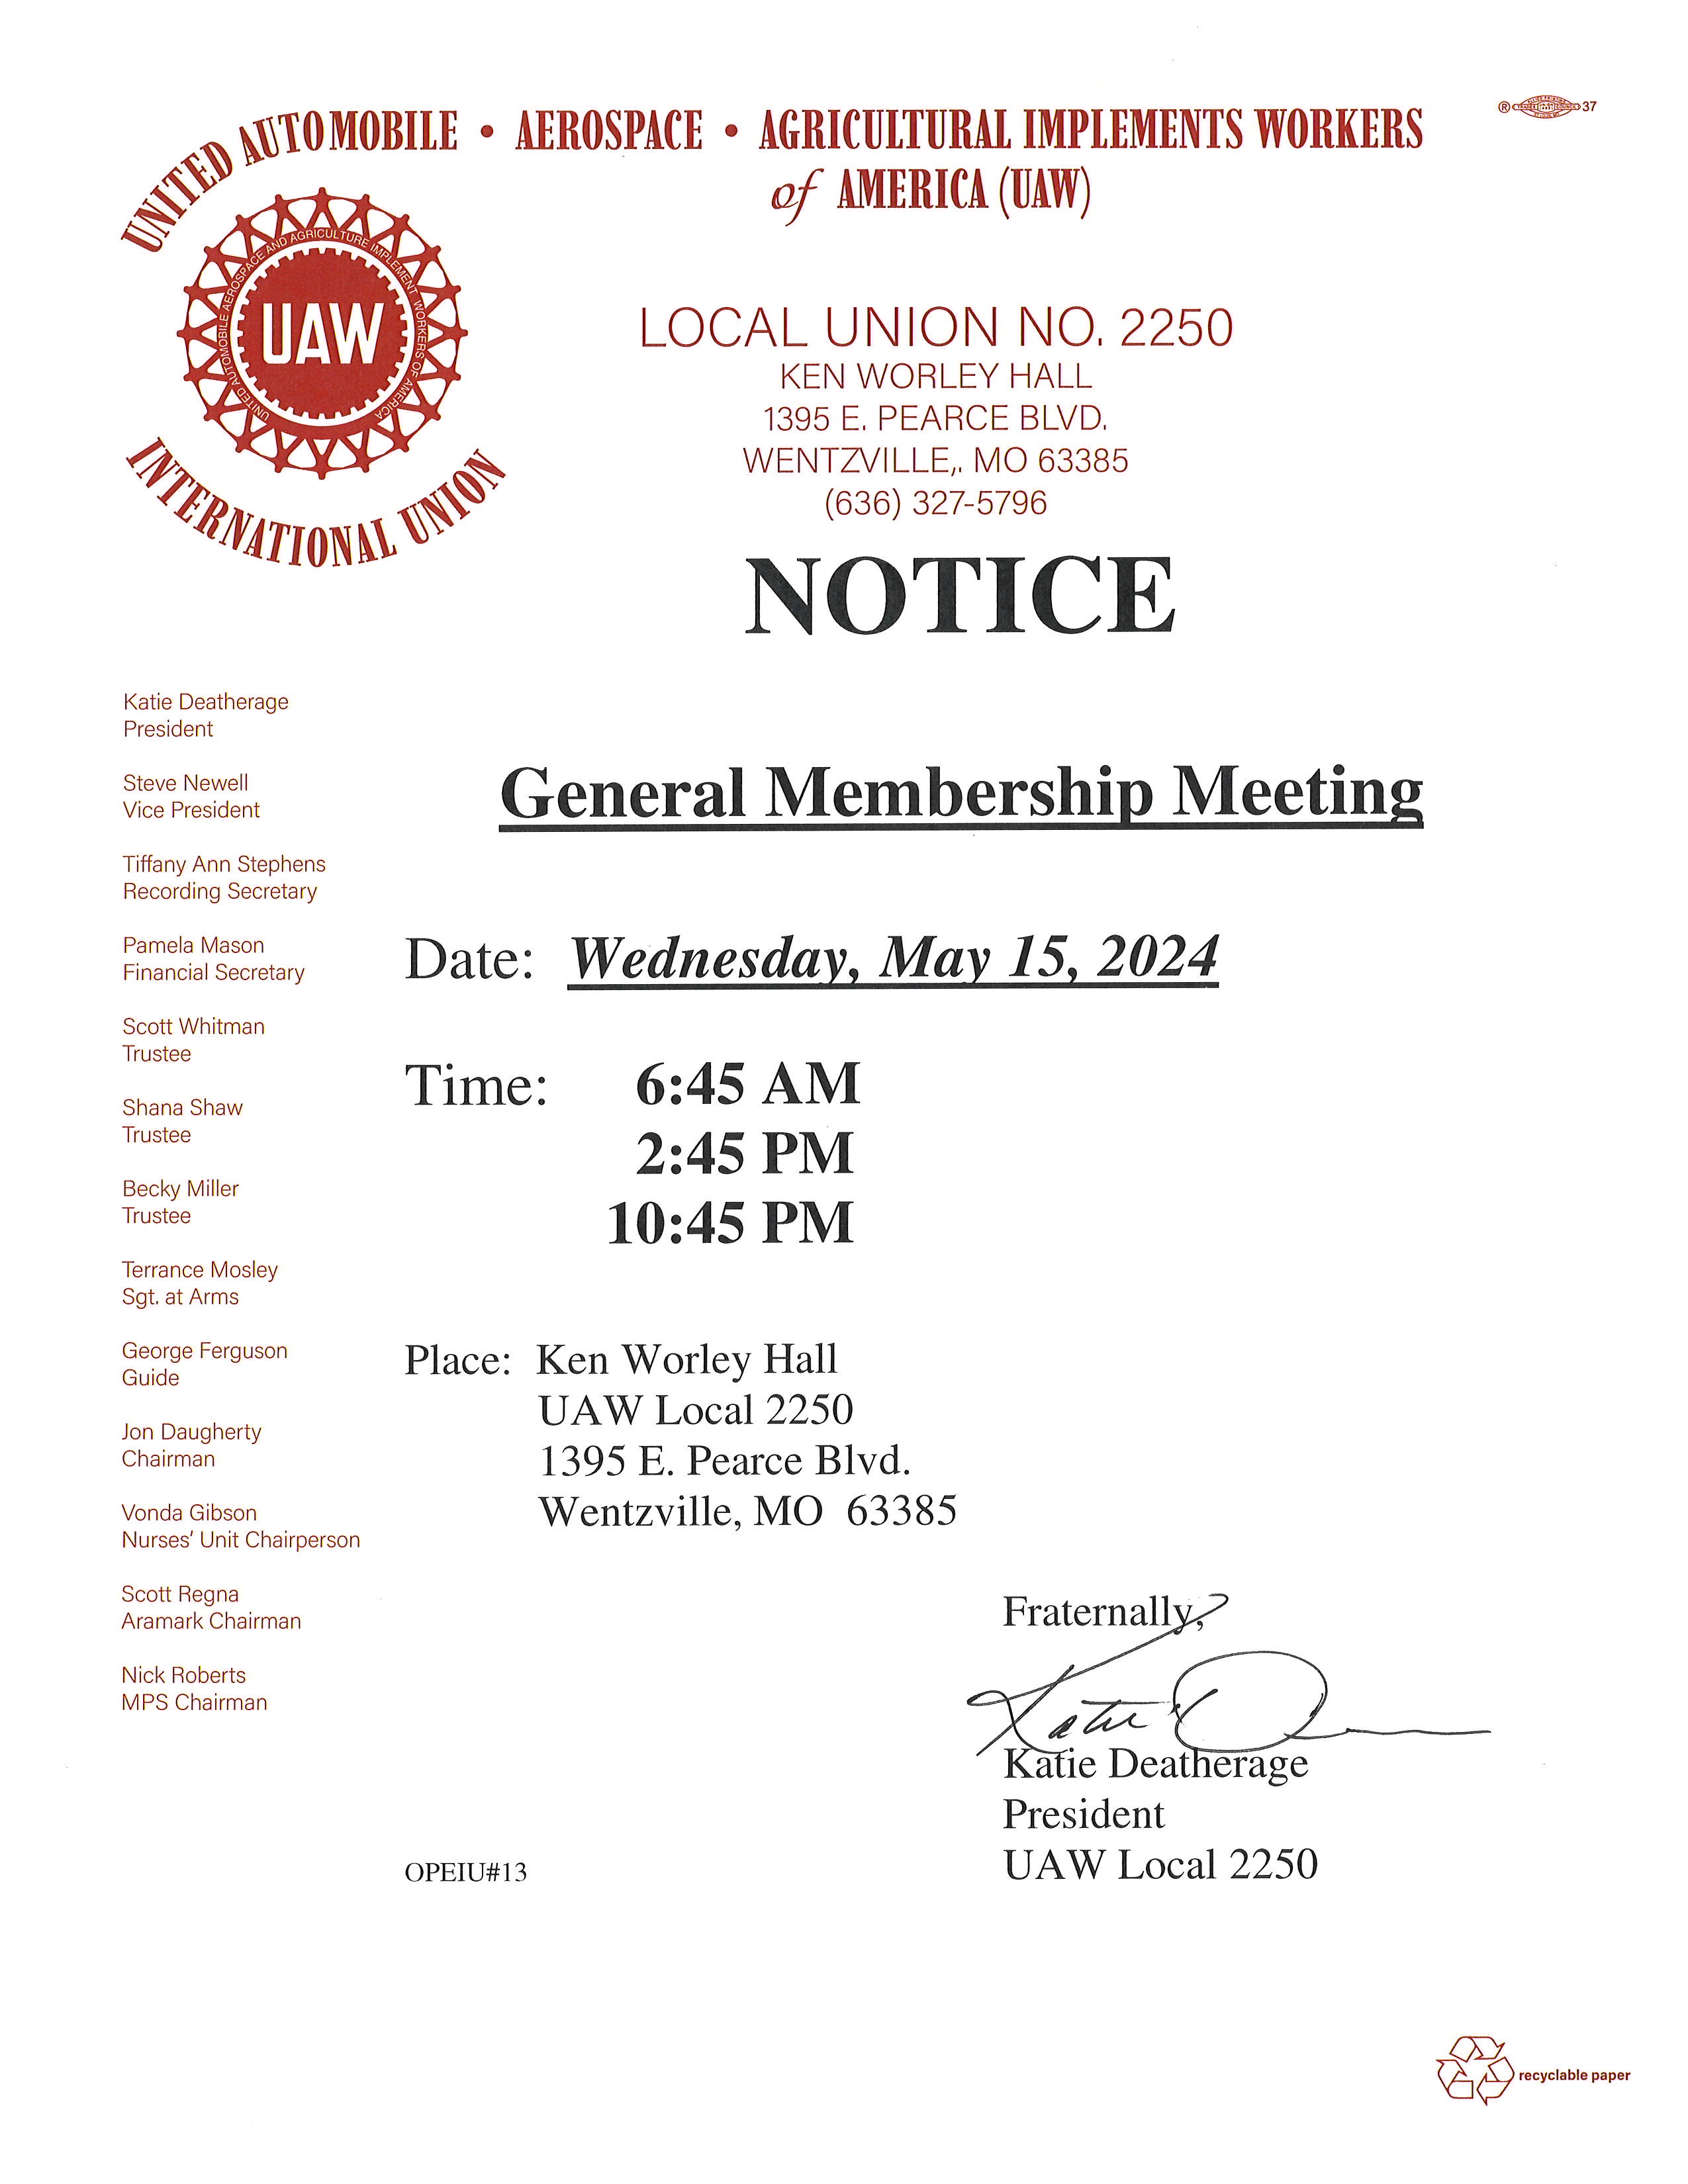 May 15th Membership Meeting